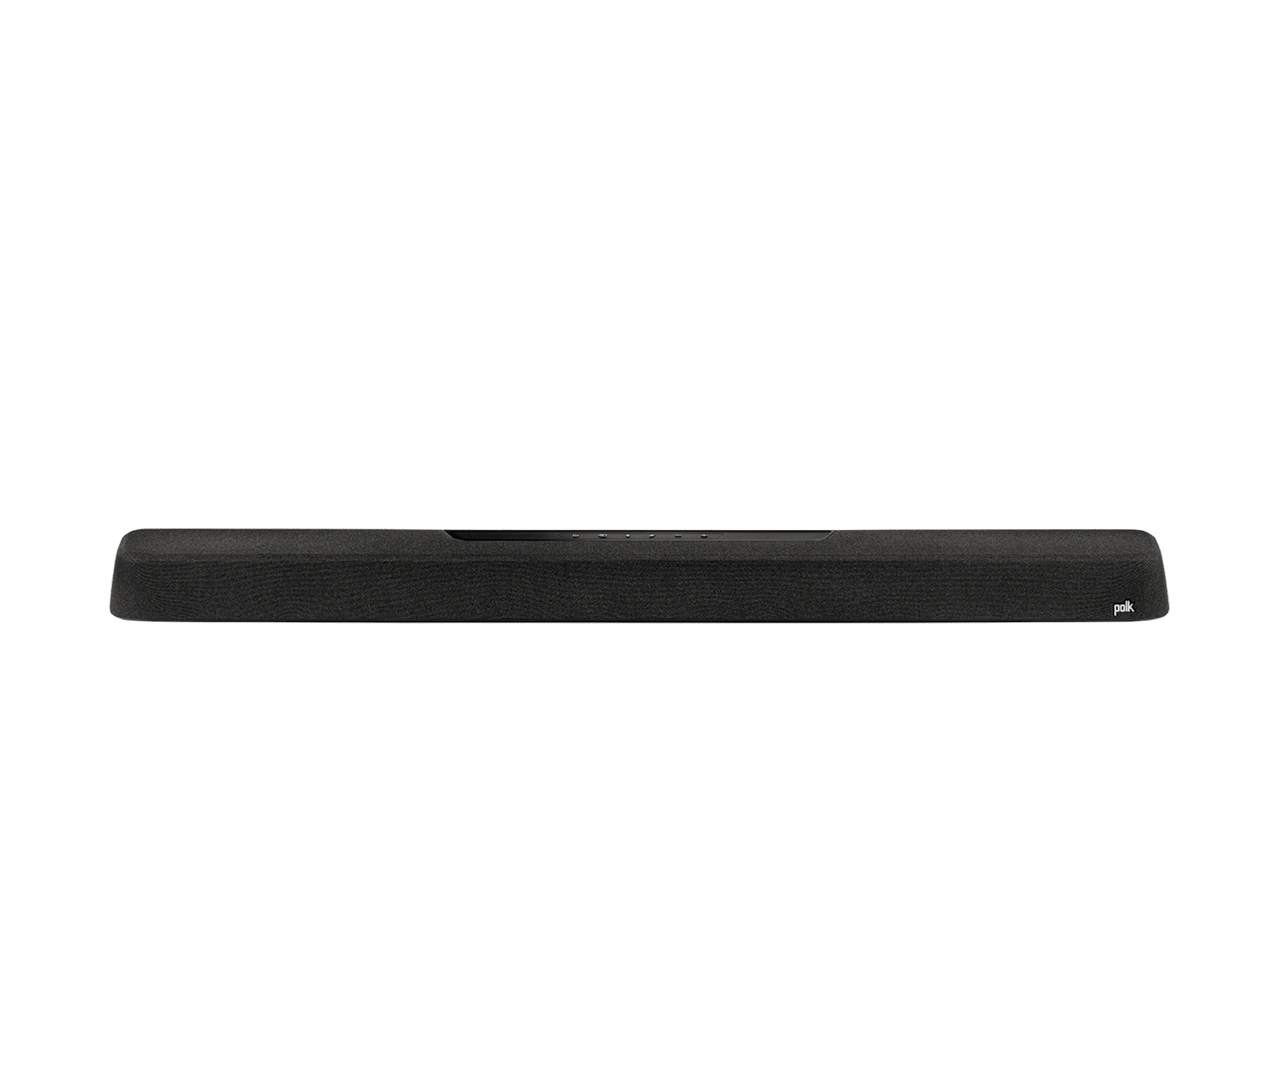 Polk Audio MagniFi Max AX 5.1.2 Atmos Soundbar & Wireless Subwoofer System